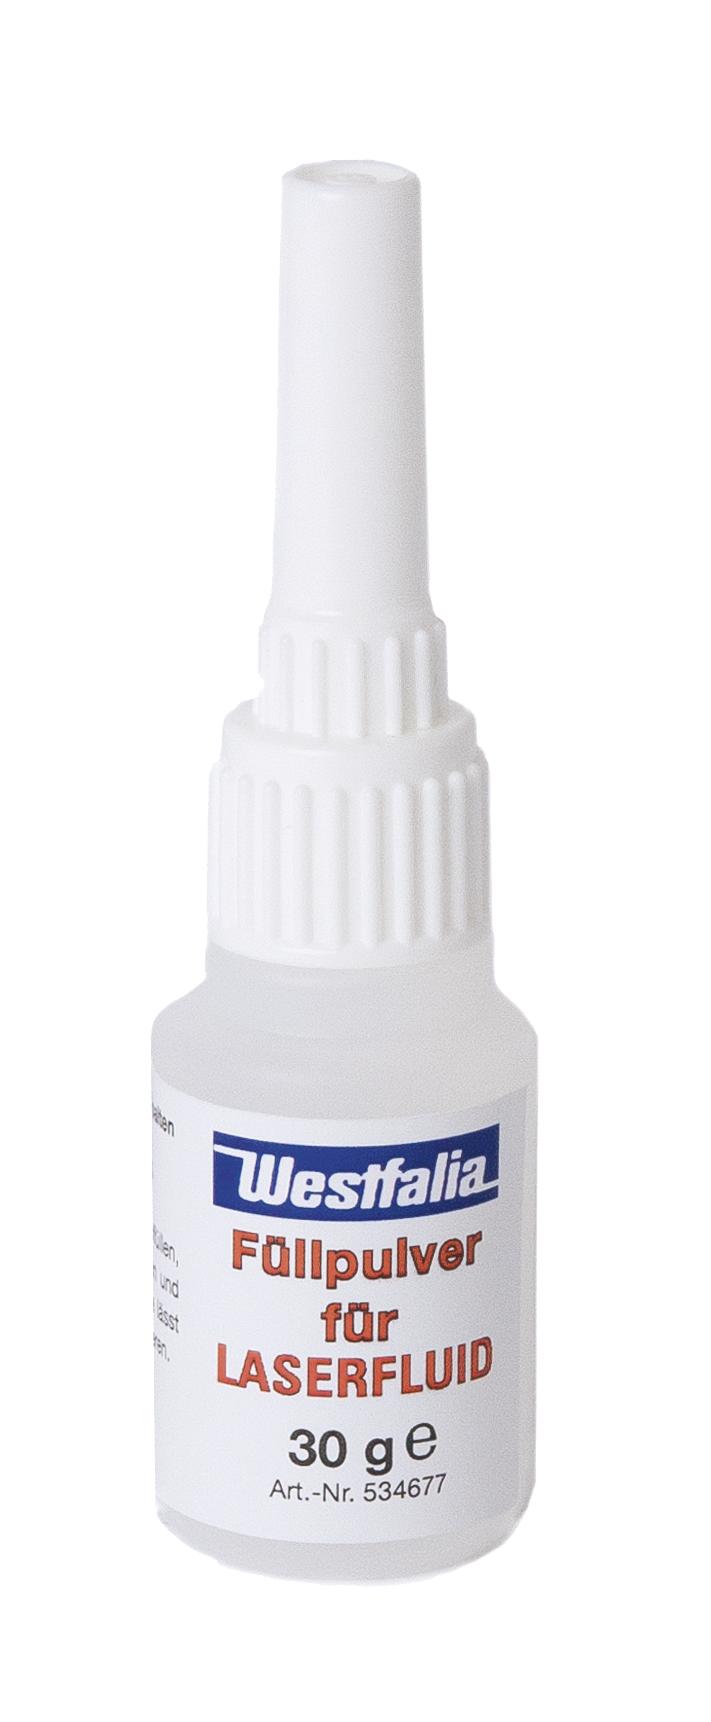 Westfalia Füllpulver für Laser-Fluid, erzeugt extrem harte Klebemasse